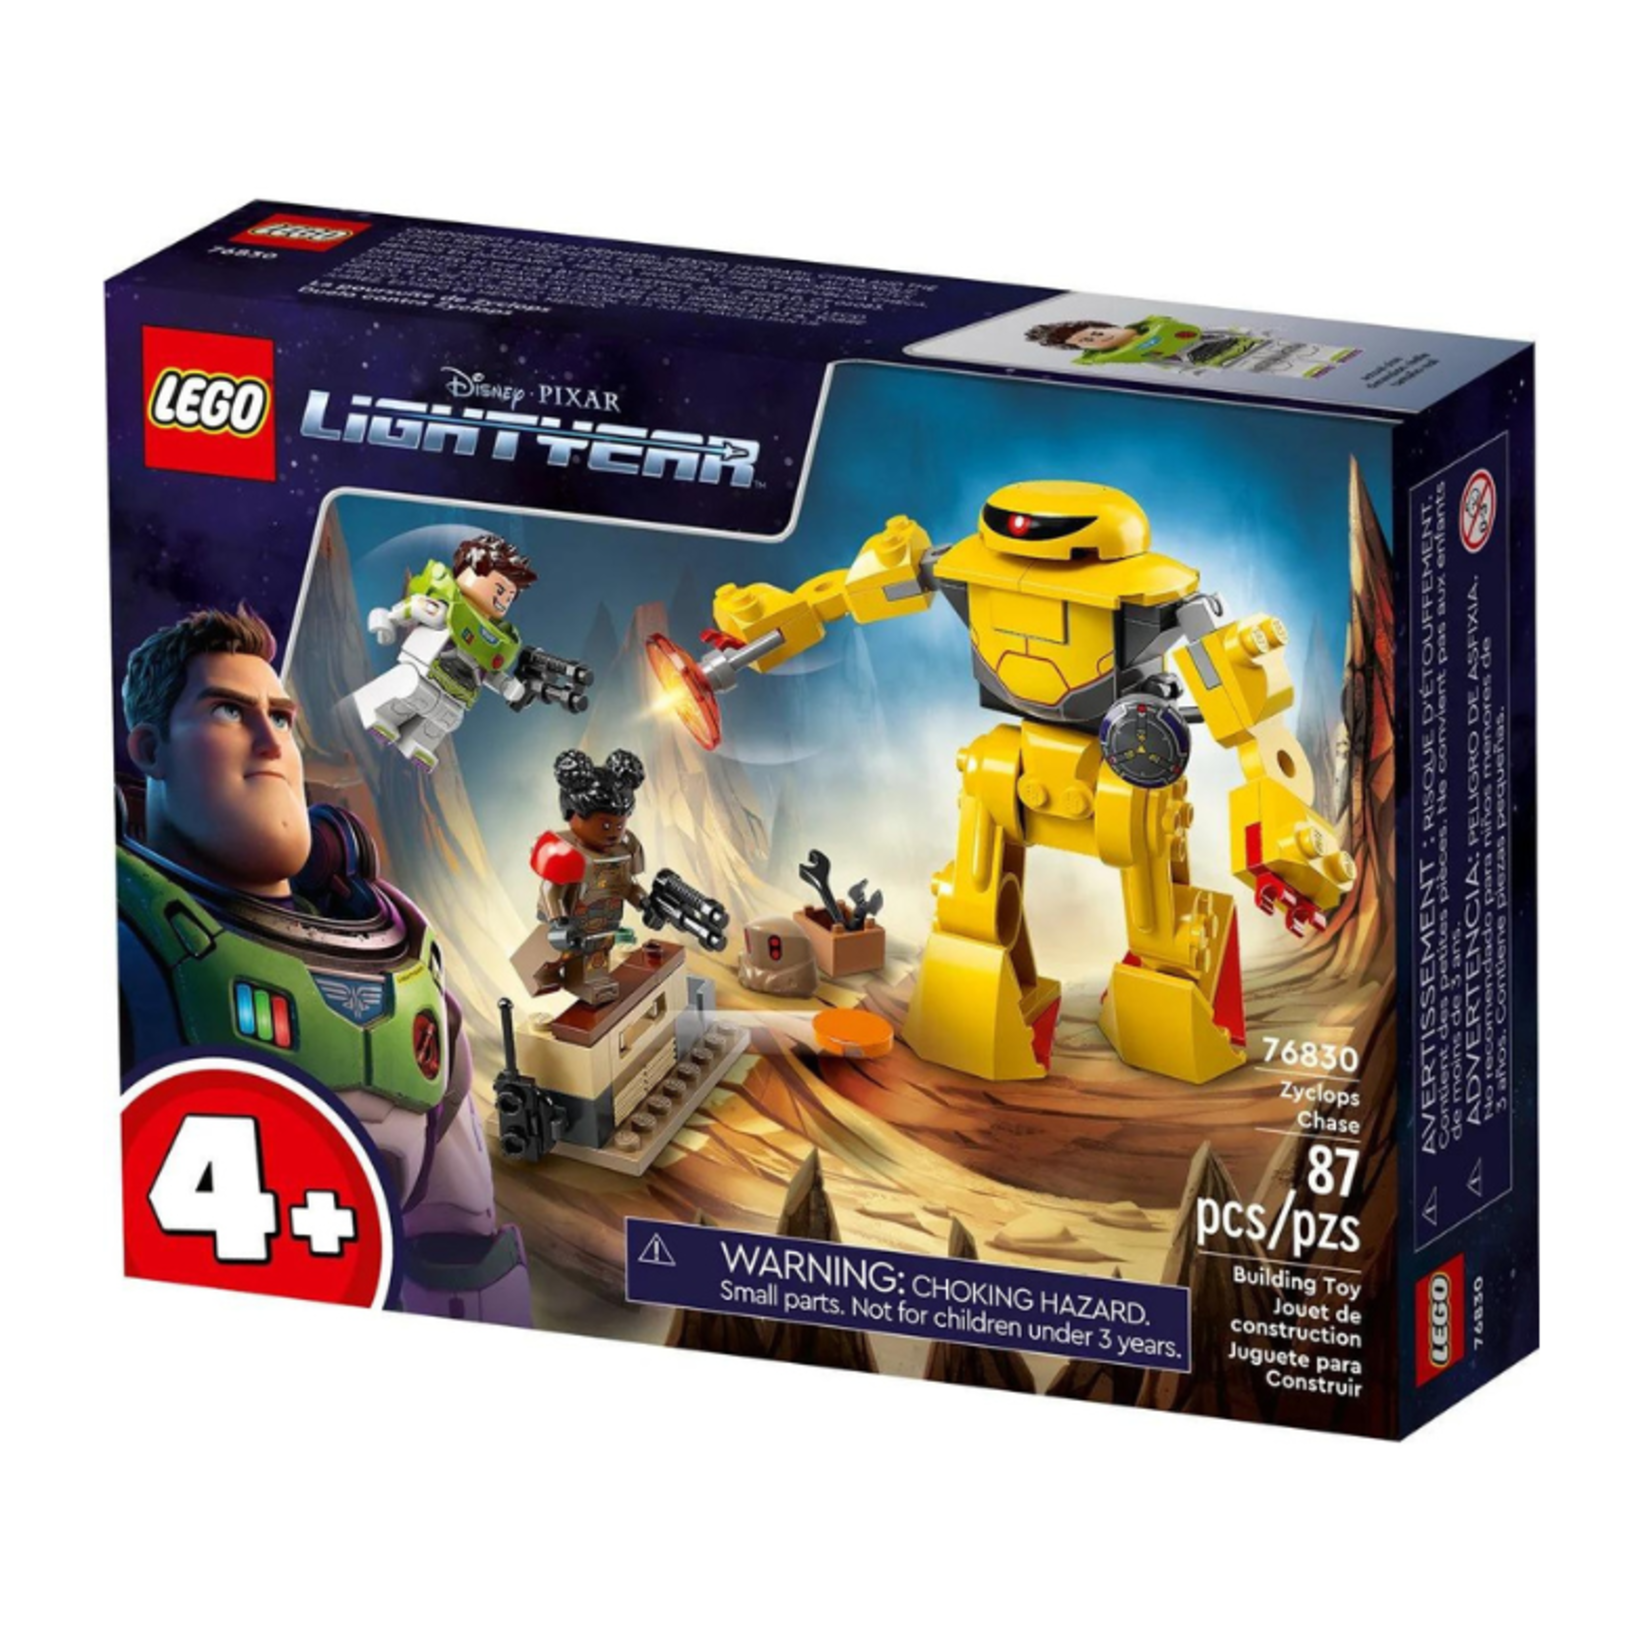 Lego Disney and Pixar's Lightyear Zyclops Chase